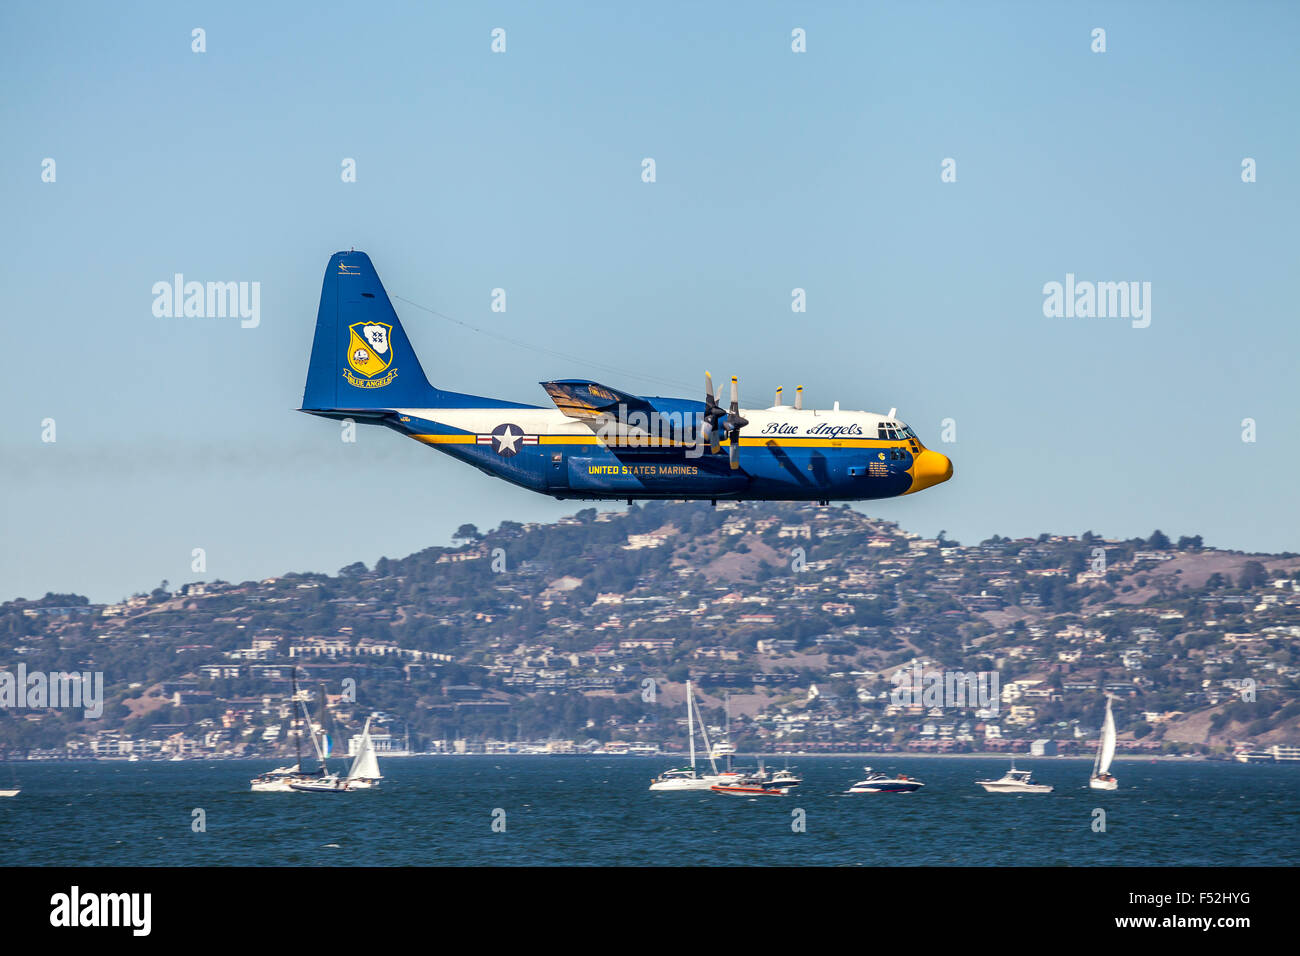 US Marine Corps C-130T Hercules nicknamed Fat Albert flying over San Francisco Bay, Fleet Week 2015, San Francisco, California Stock Photo